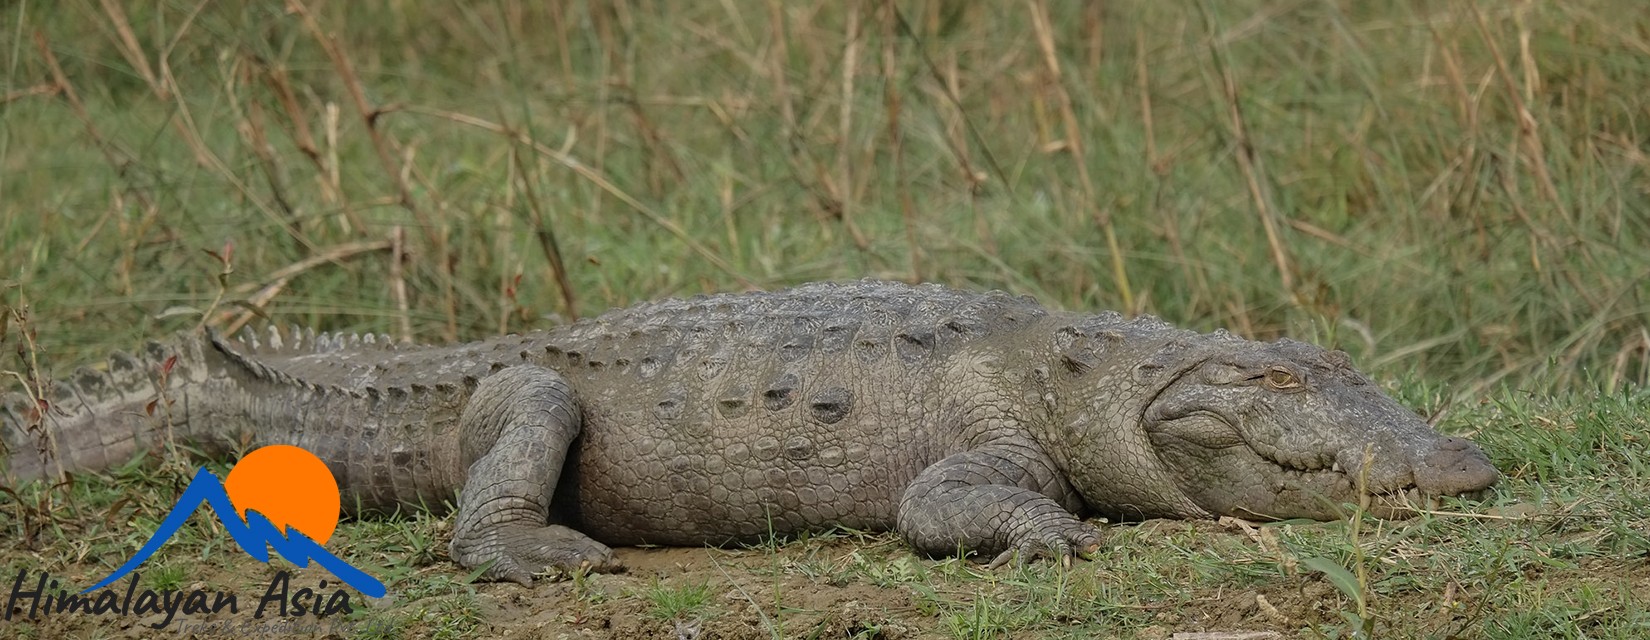 crocodile-chitwan-national-park